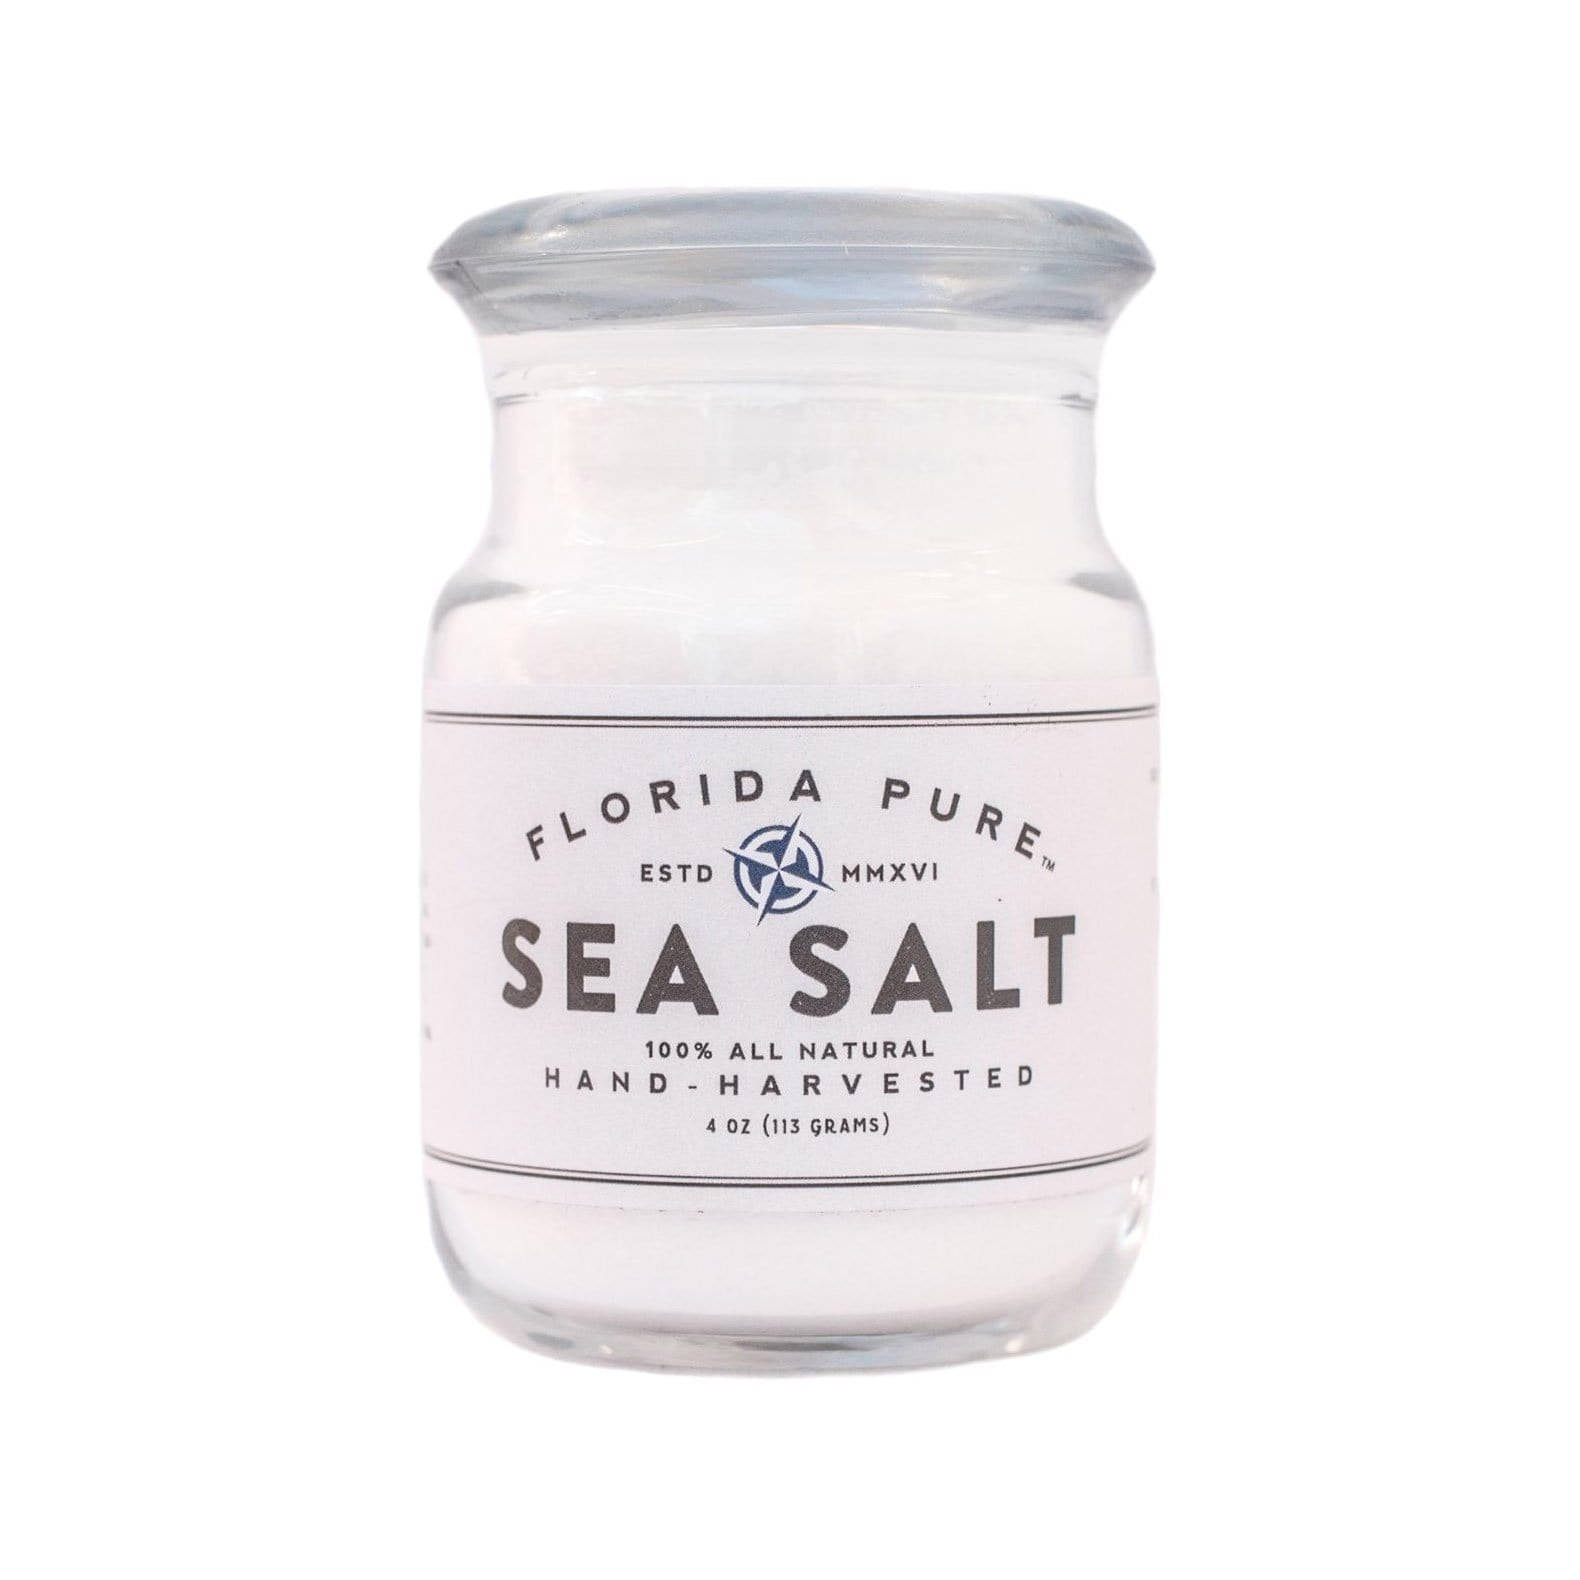 Florida Pure Florida Pure 100% All Natural Hand - Harvested Sea Salt 4 oz